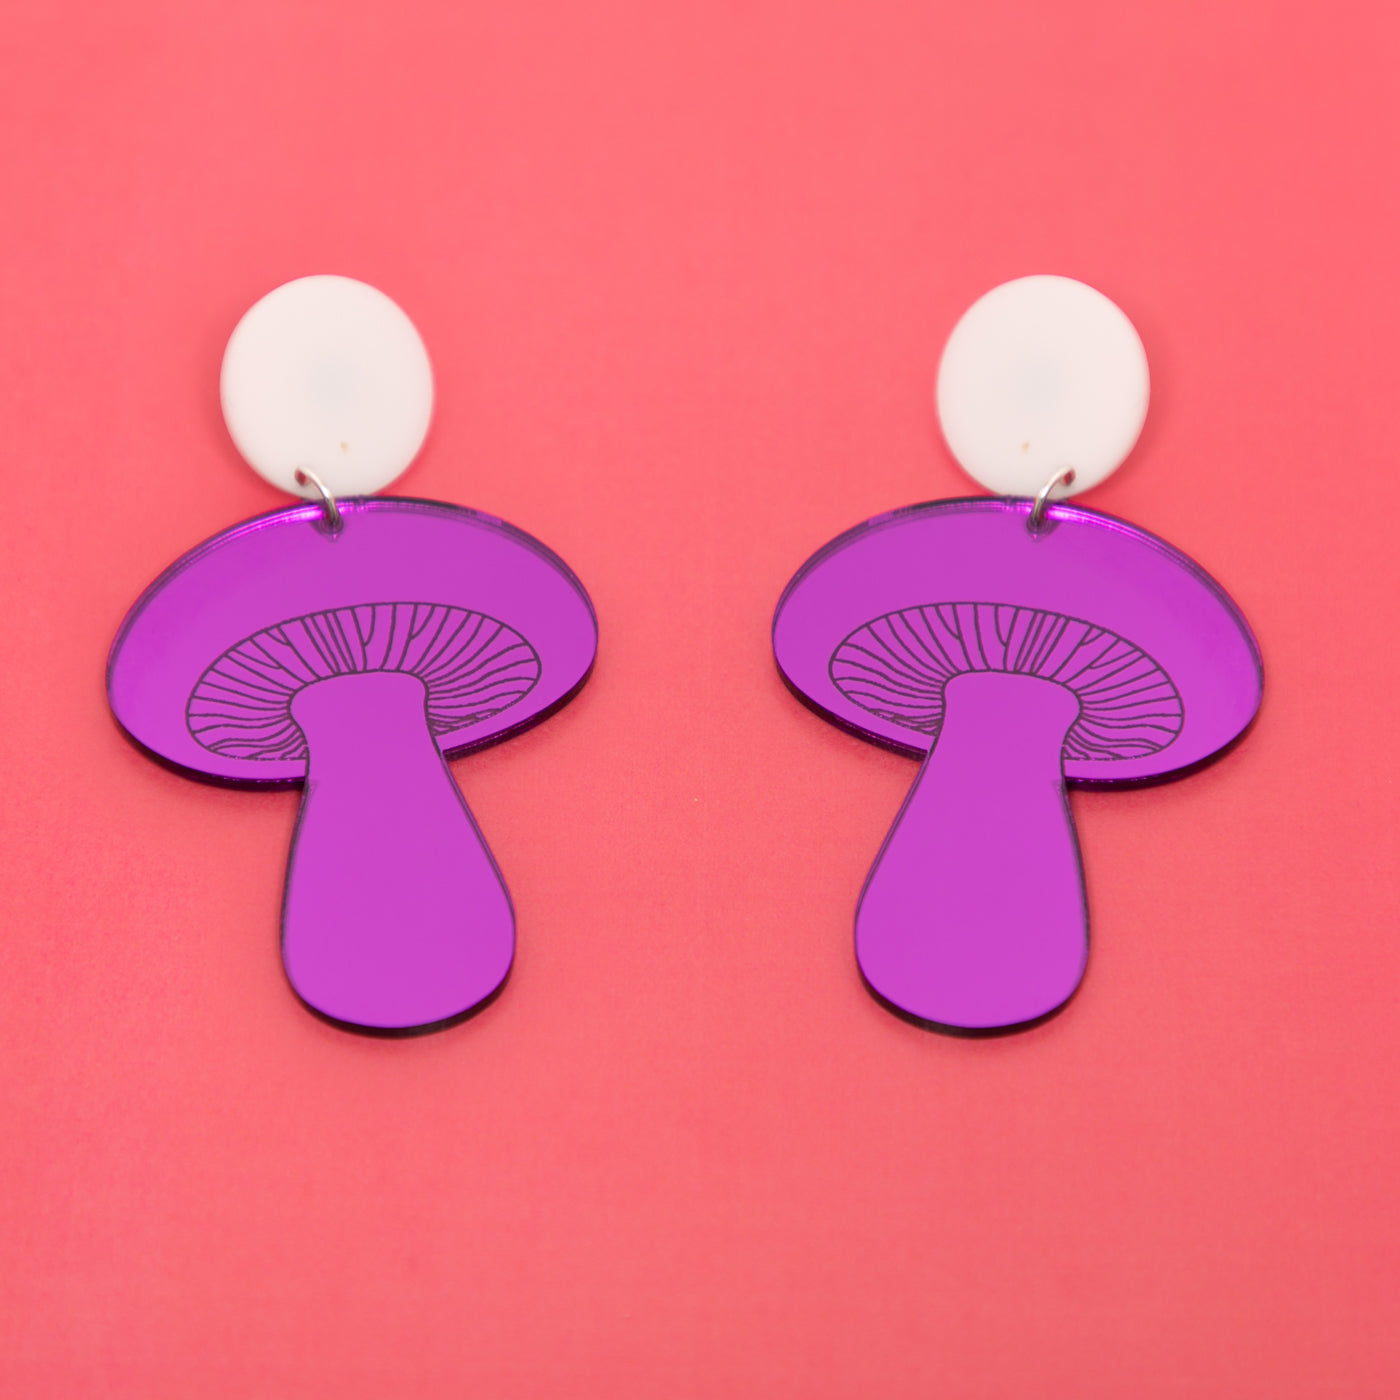 The Gilly Mushroom Stud Earrings,EarringMindFlowers